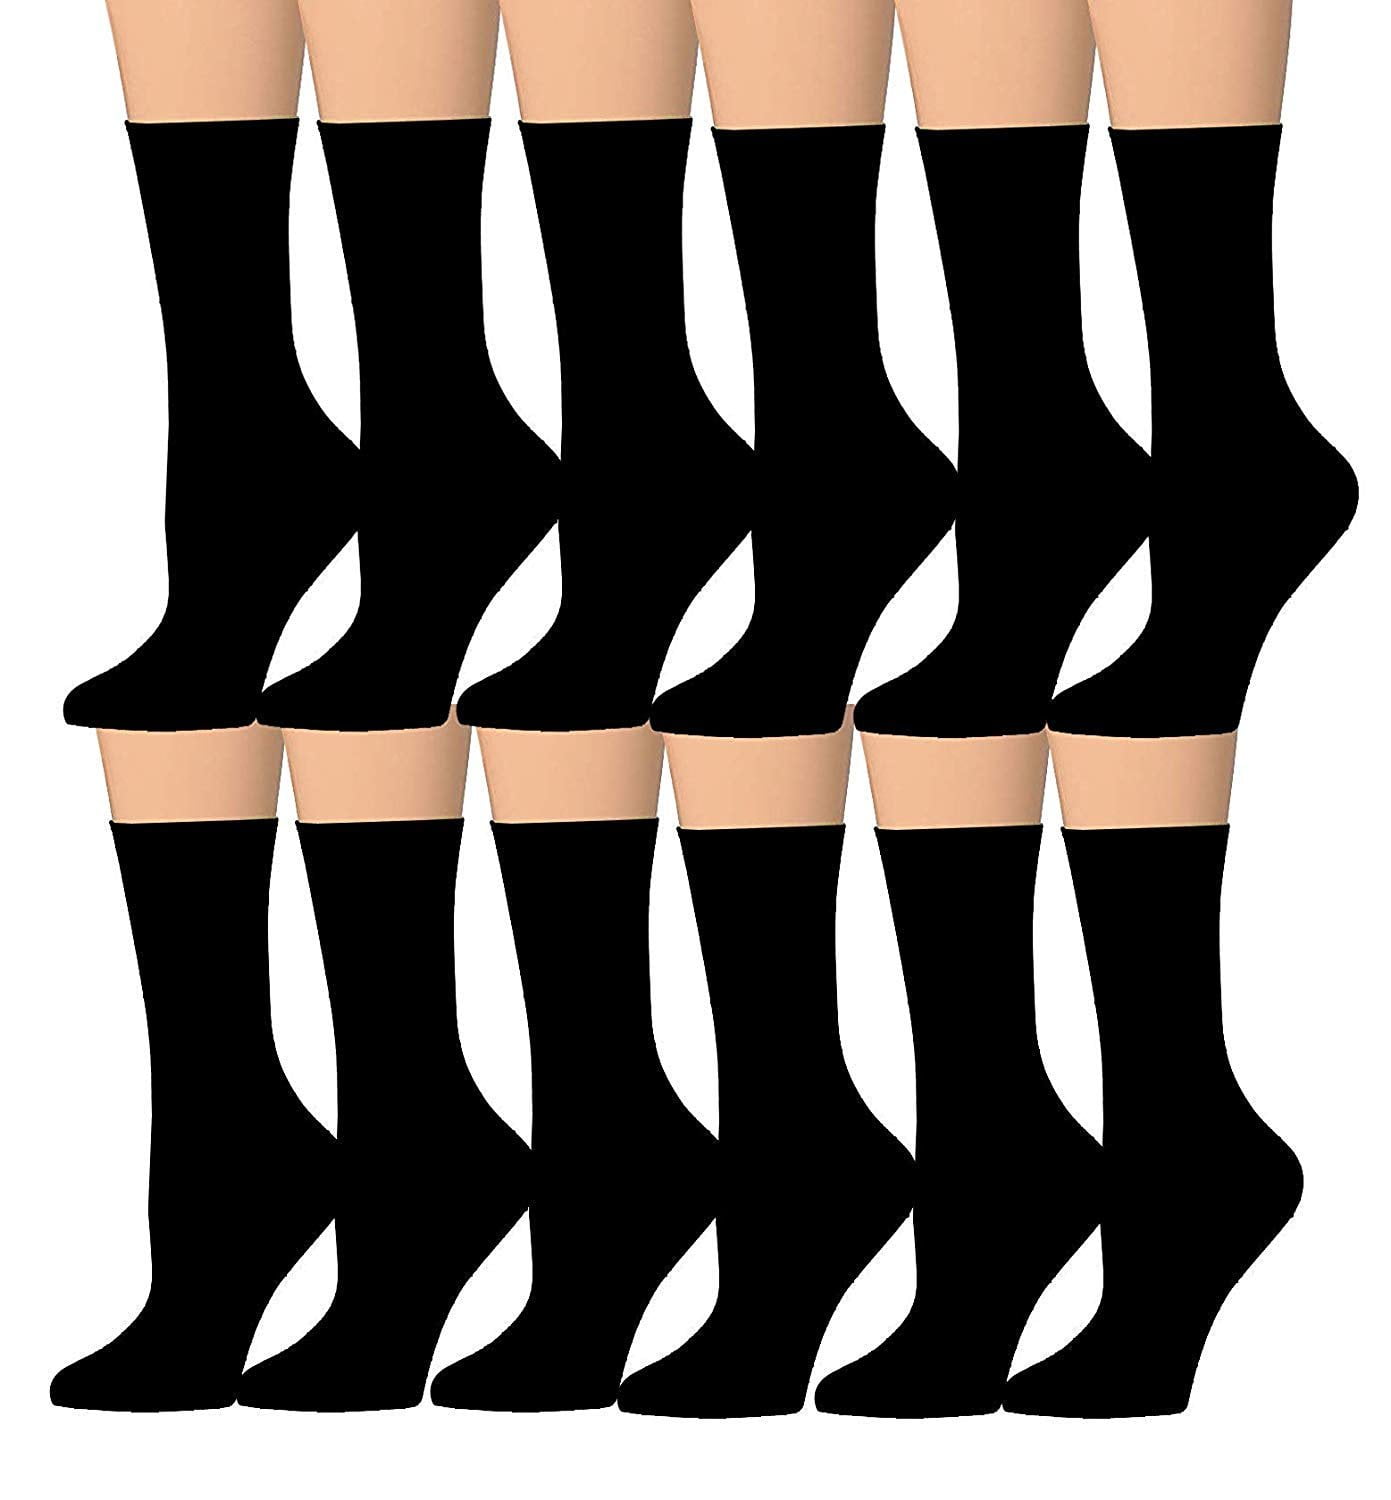 Tipi Toe Women's 12 Pairs Colorful Patterned Crew Socks (Black ...